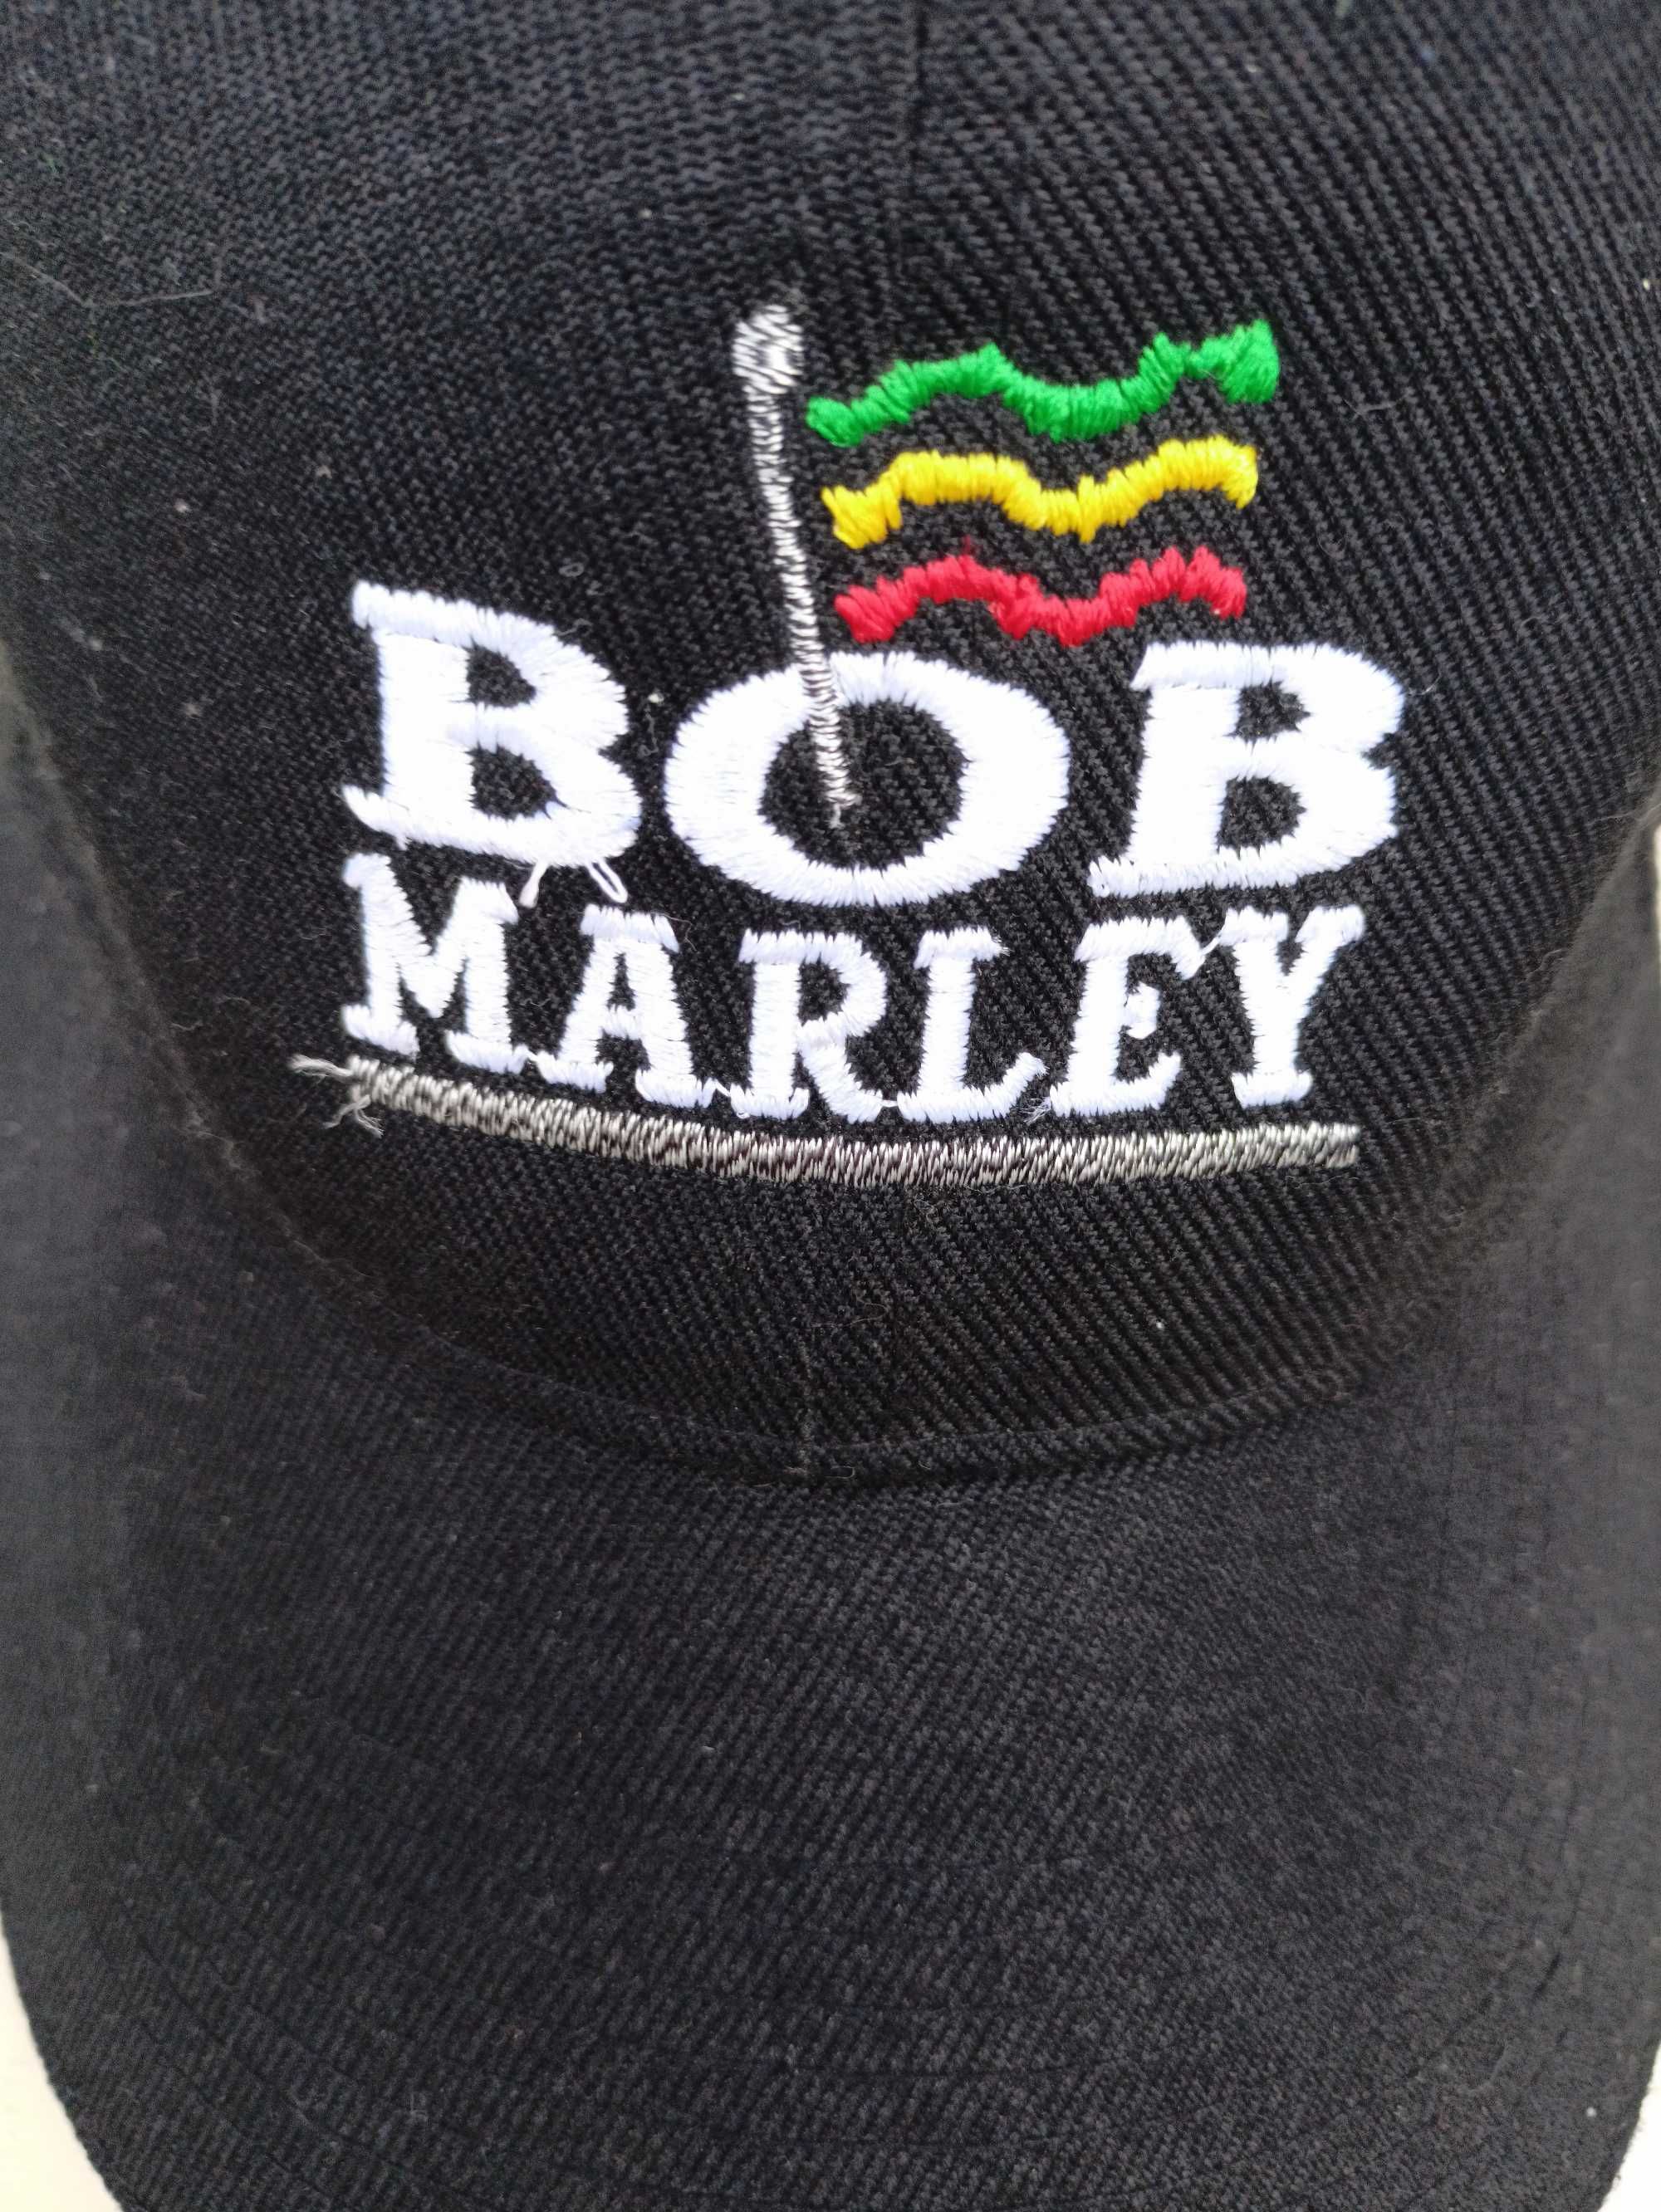 Czapka Bob Marley rasta reggae bejsbolówka full cup